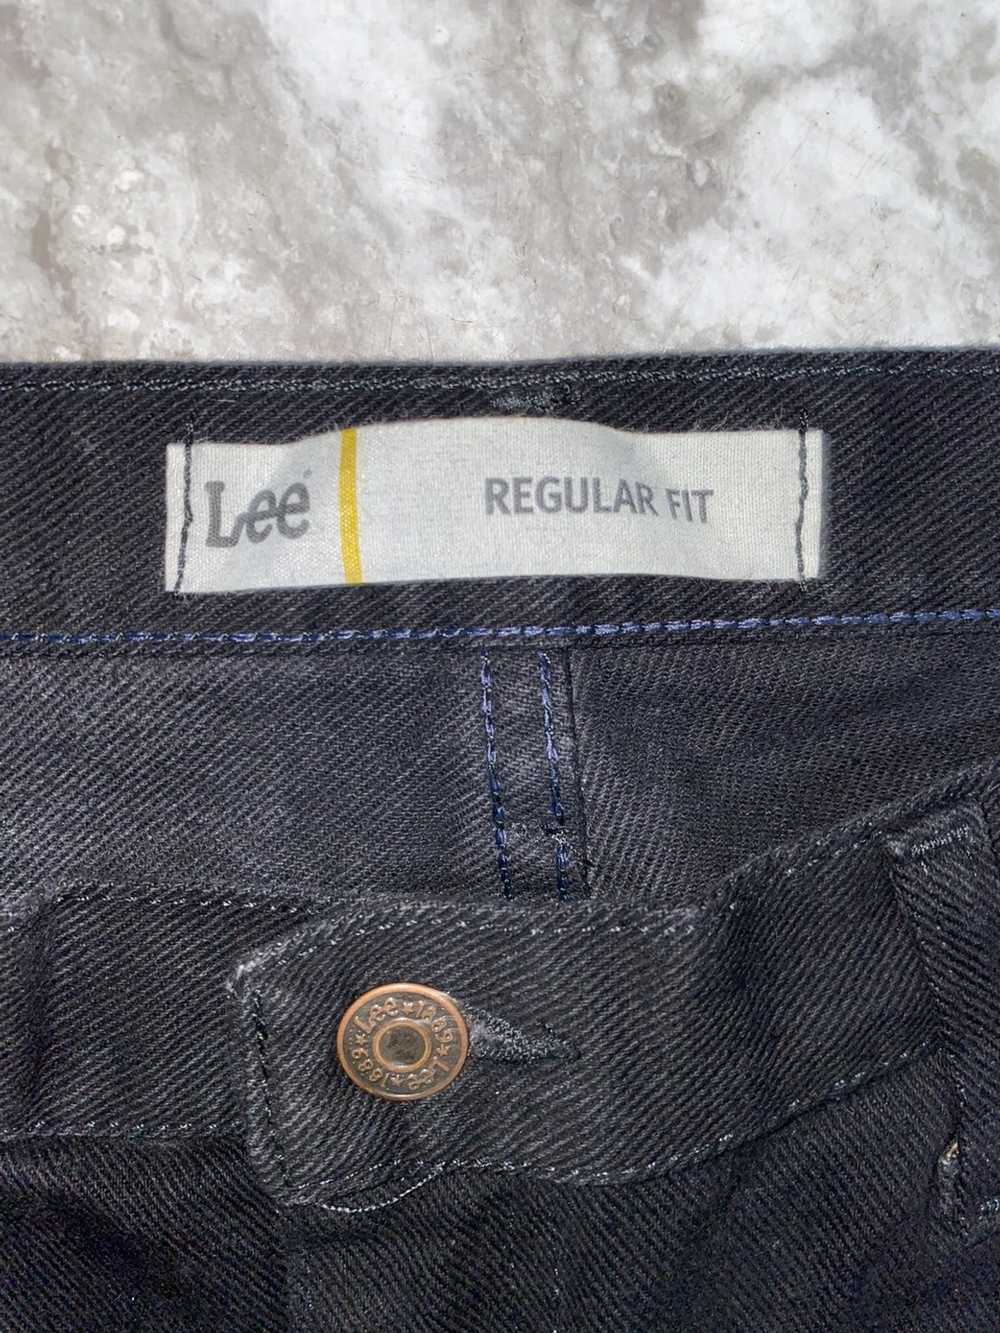 Lee × Vintage Vintage Faded Black Lee Denim Jeans - image 2